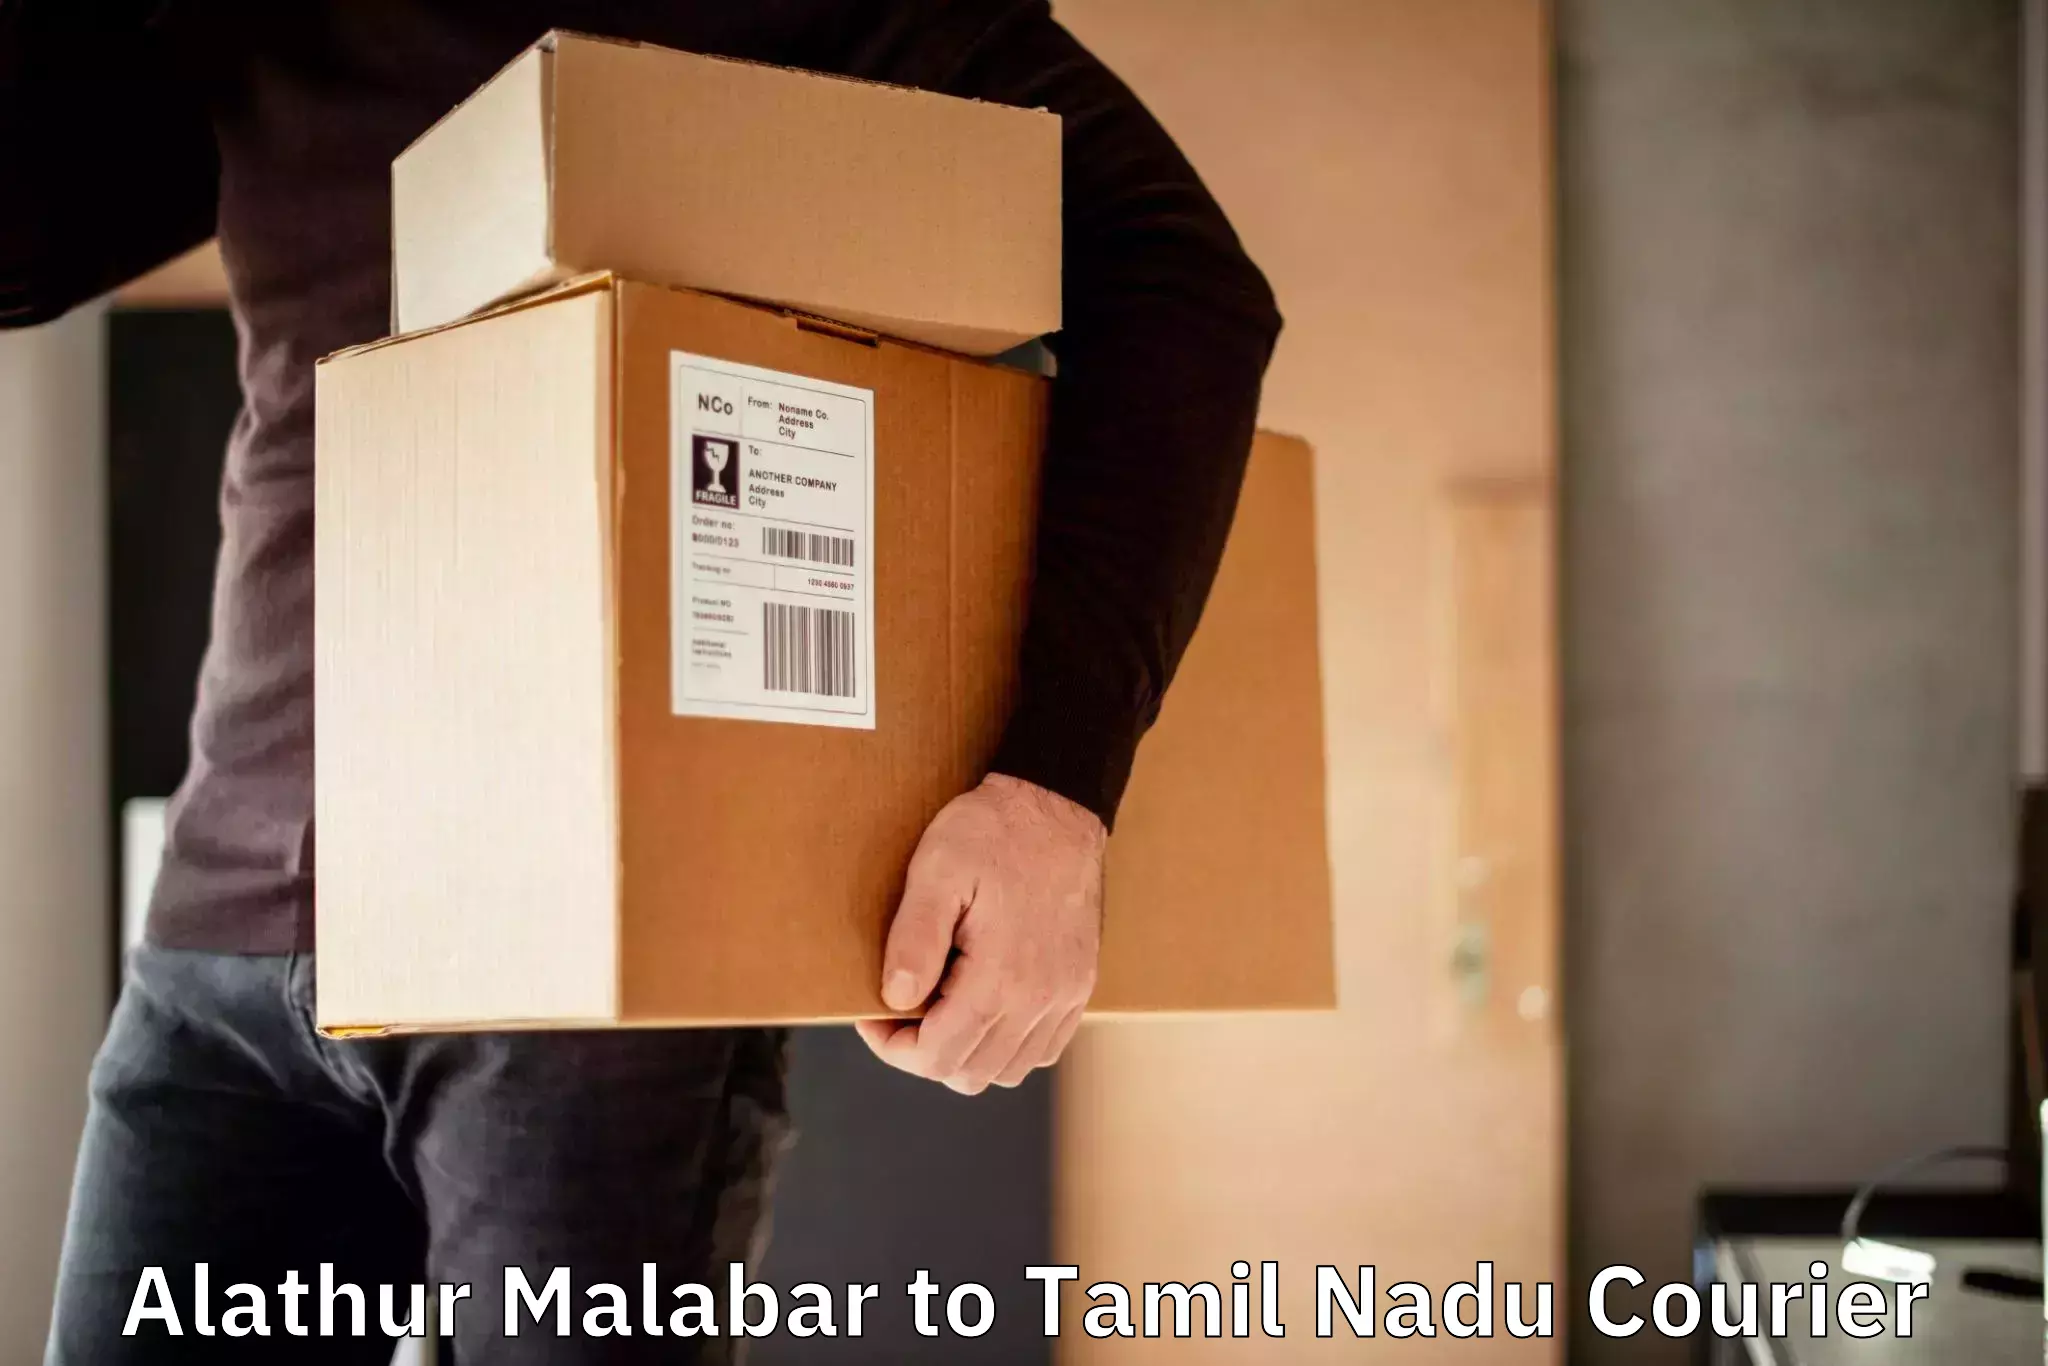 Specialized shipment handling Alathur Malabar to Thiruthuraipoondi